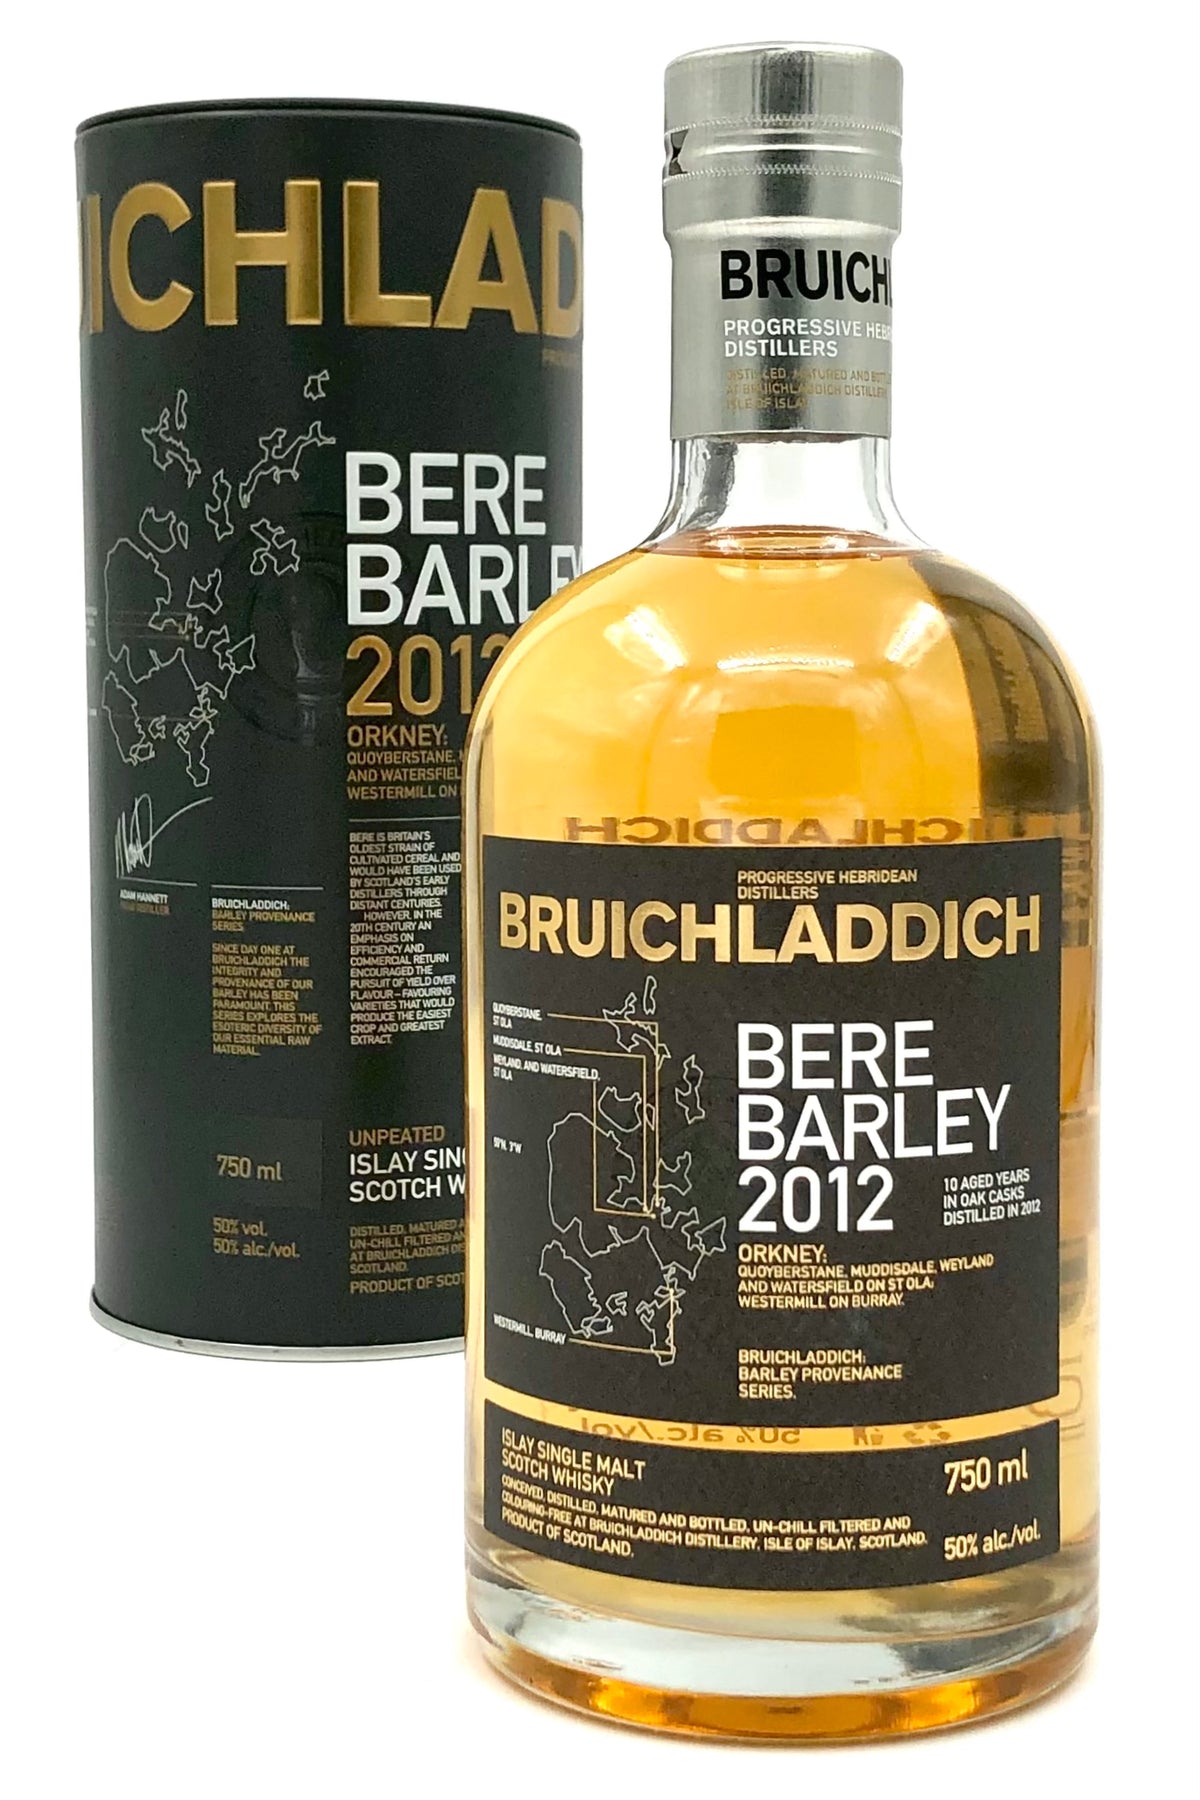 Bruichladdich Bere Barley Vintage 2012 Unpeated Single Malt Scotch Whisky